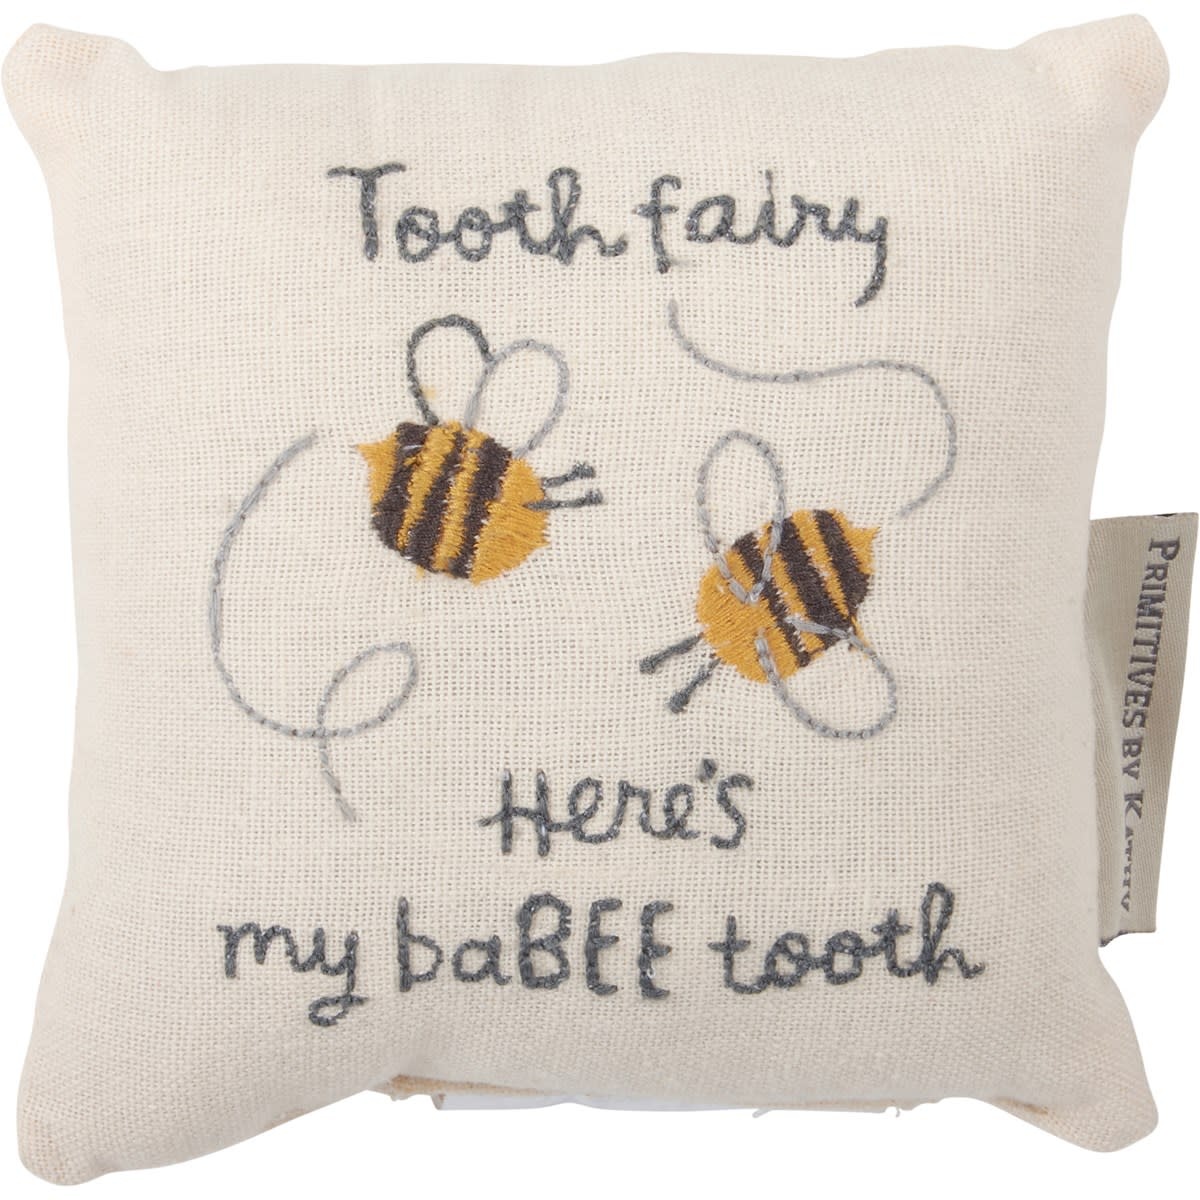 FLEURISH My Babee Tooth Fairy Pillow